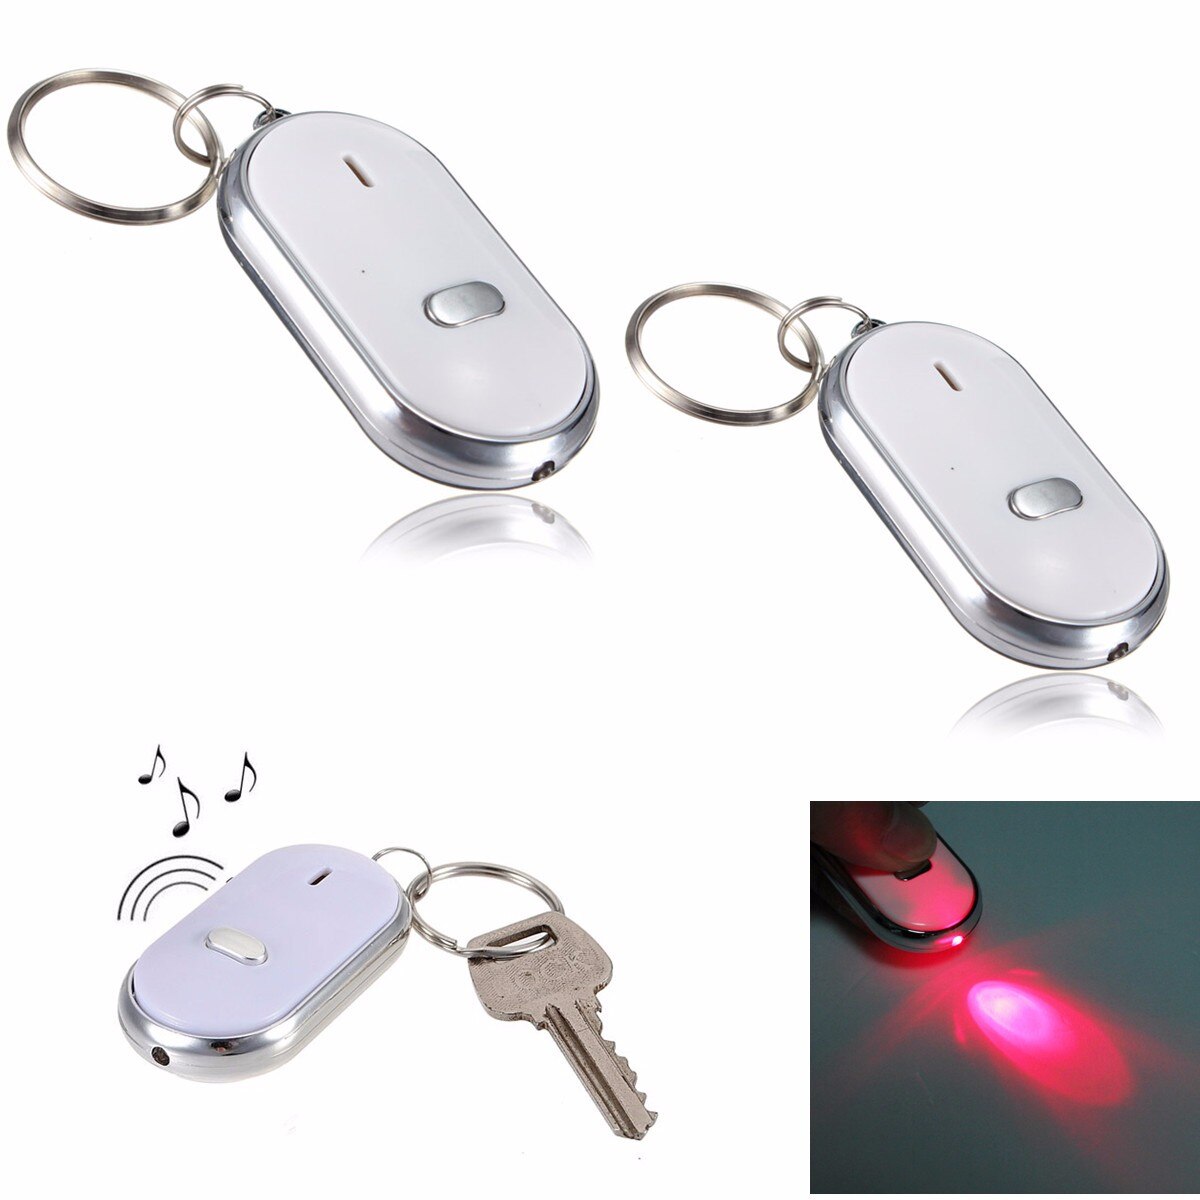 1PCs LED Light Zaklamp Remote Sound Control Lost Key Finder Locator Locator Sleutelhanger sleutelhanger Met Fluitje Claps